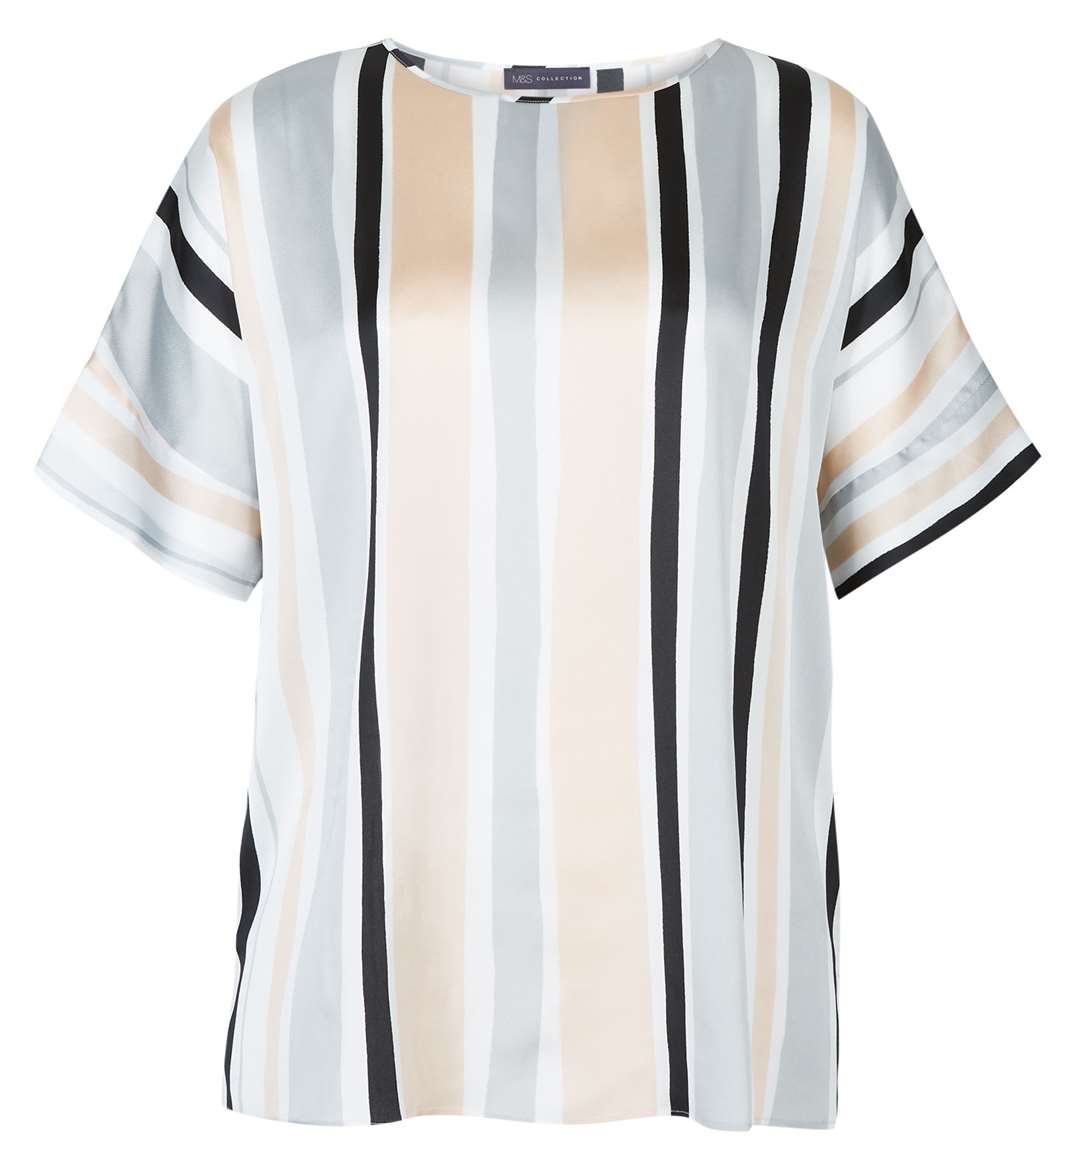 Striped round neck short sleeve blouse, £32.50